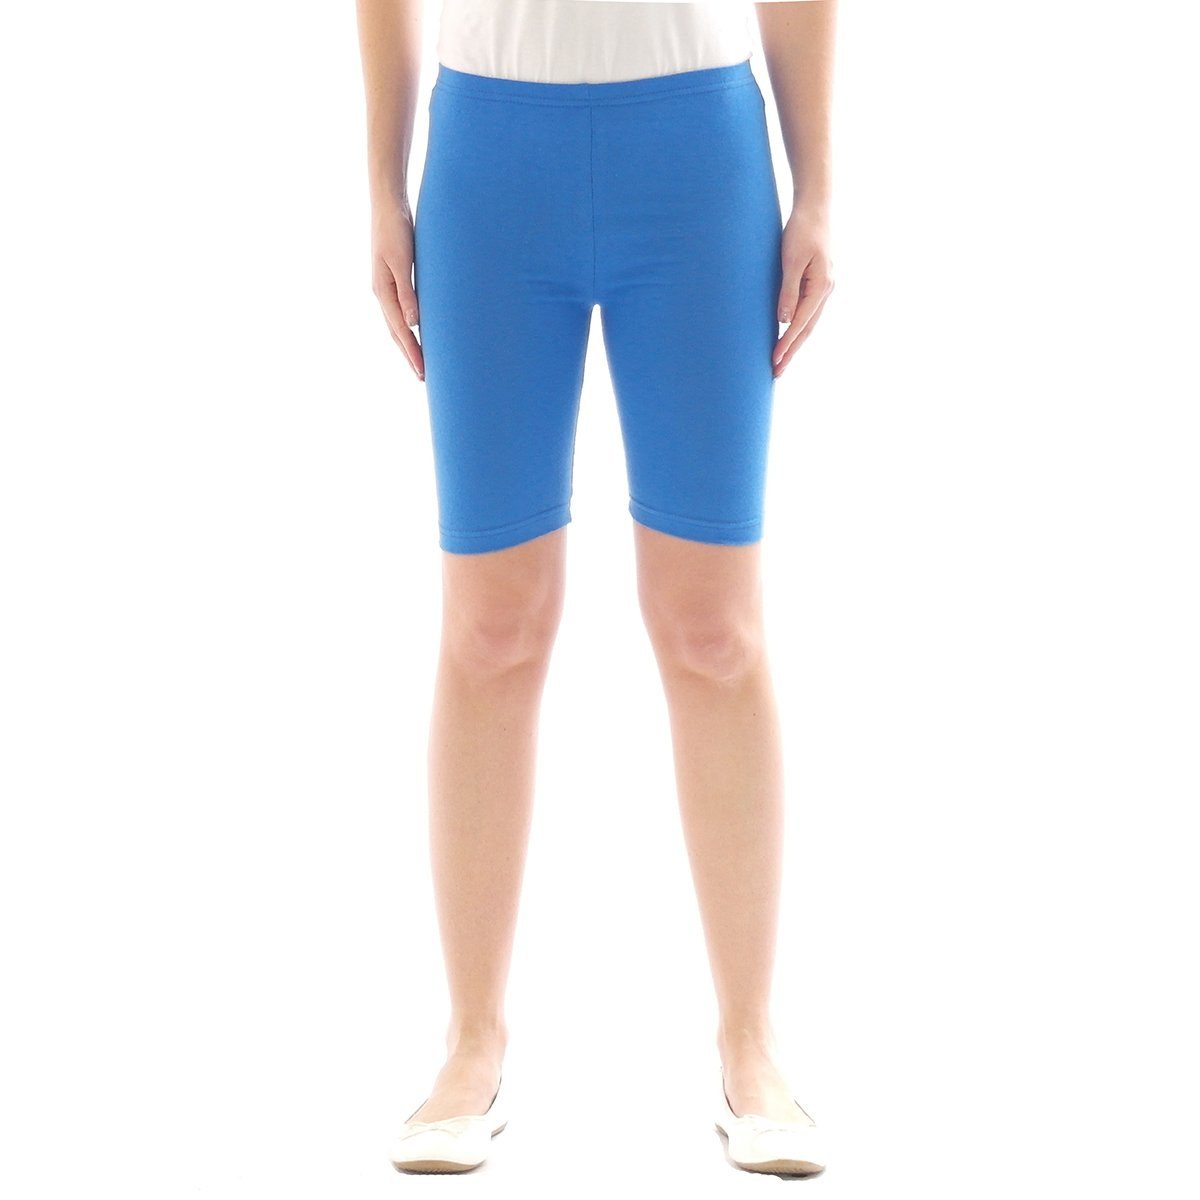 Jungen Shorts Kinder Baumwolle Shorts Mädchen blau Sport Pants 1/2 SYS